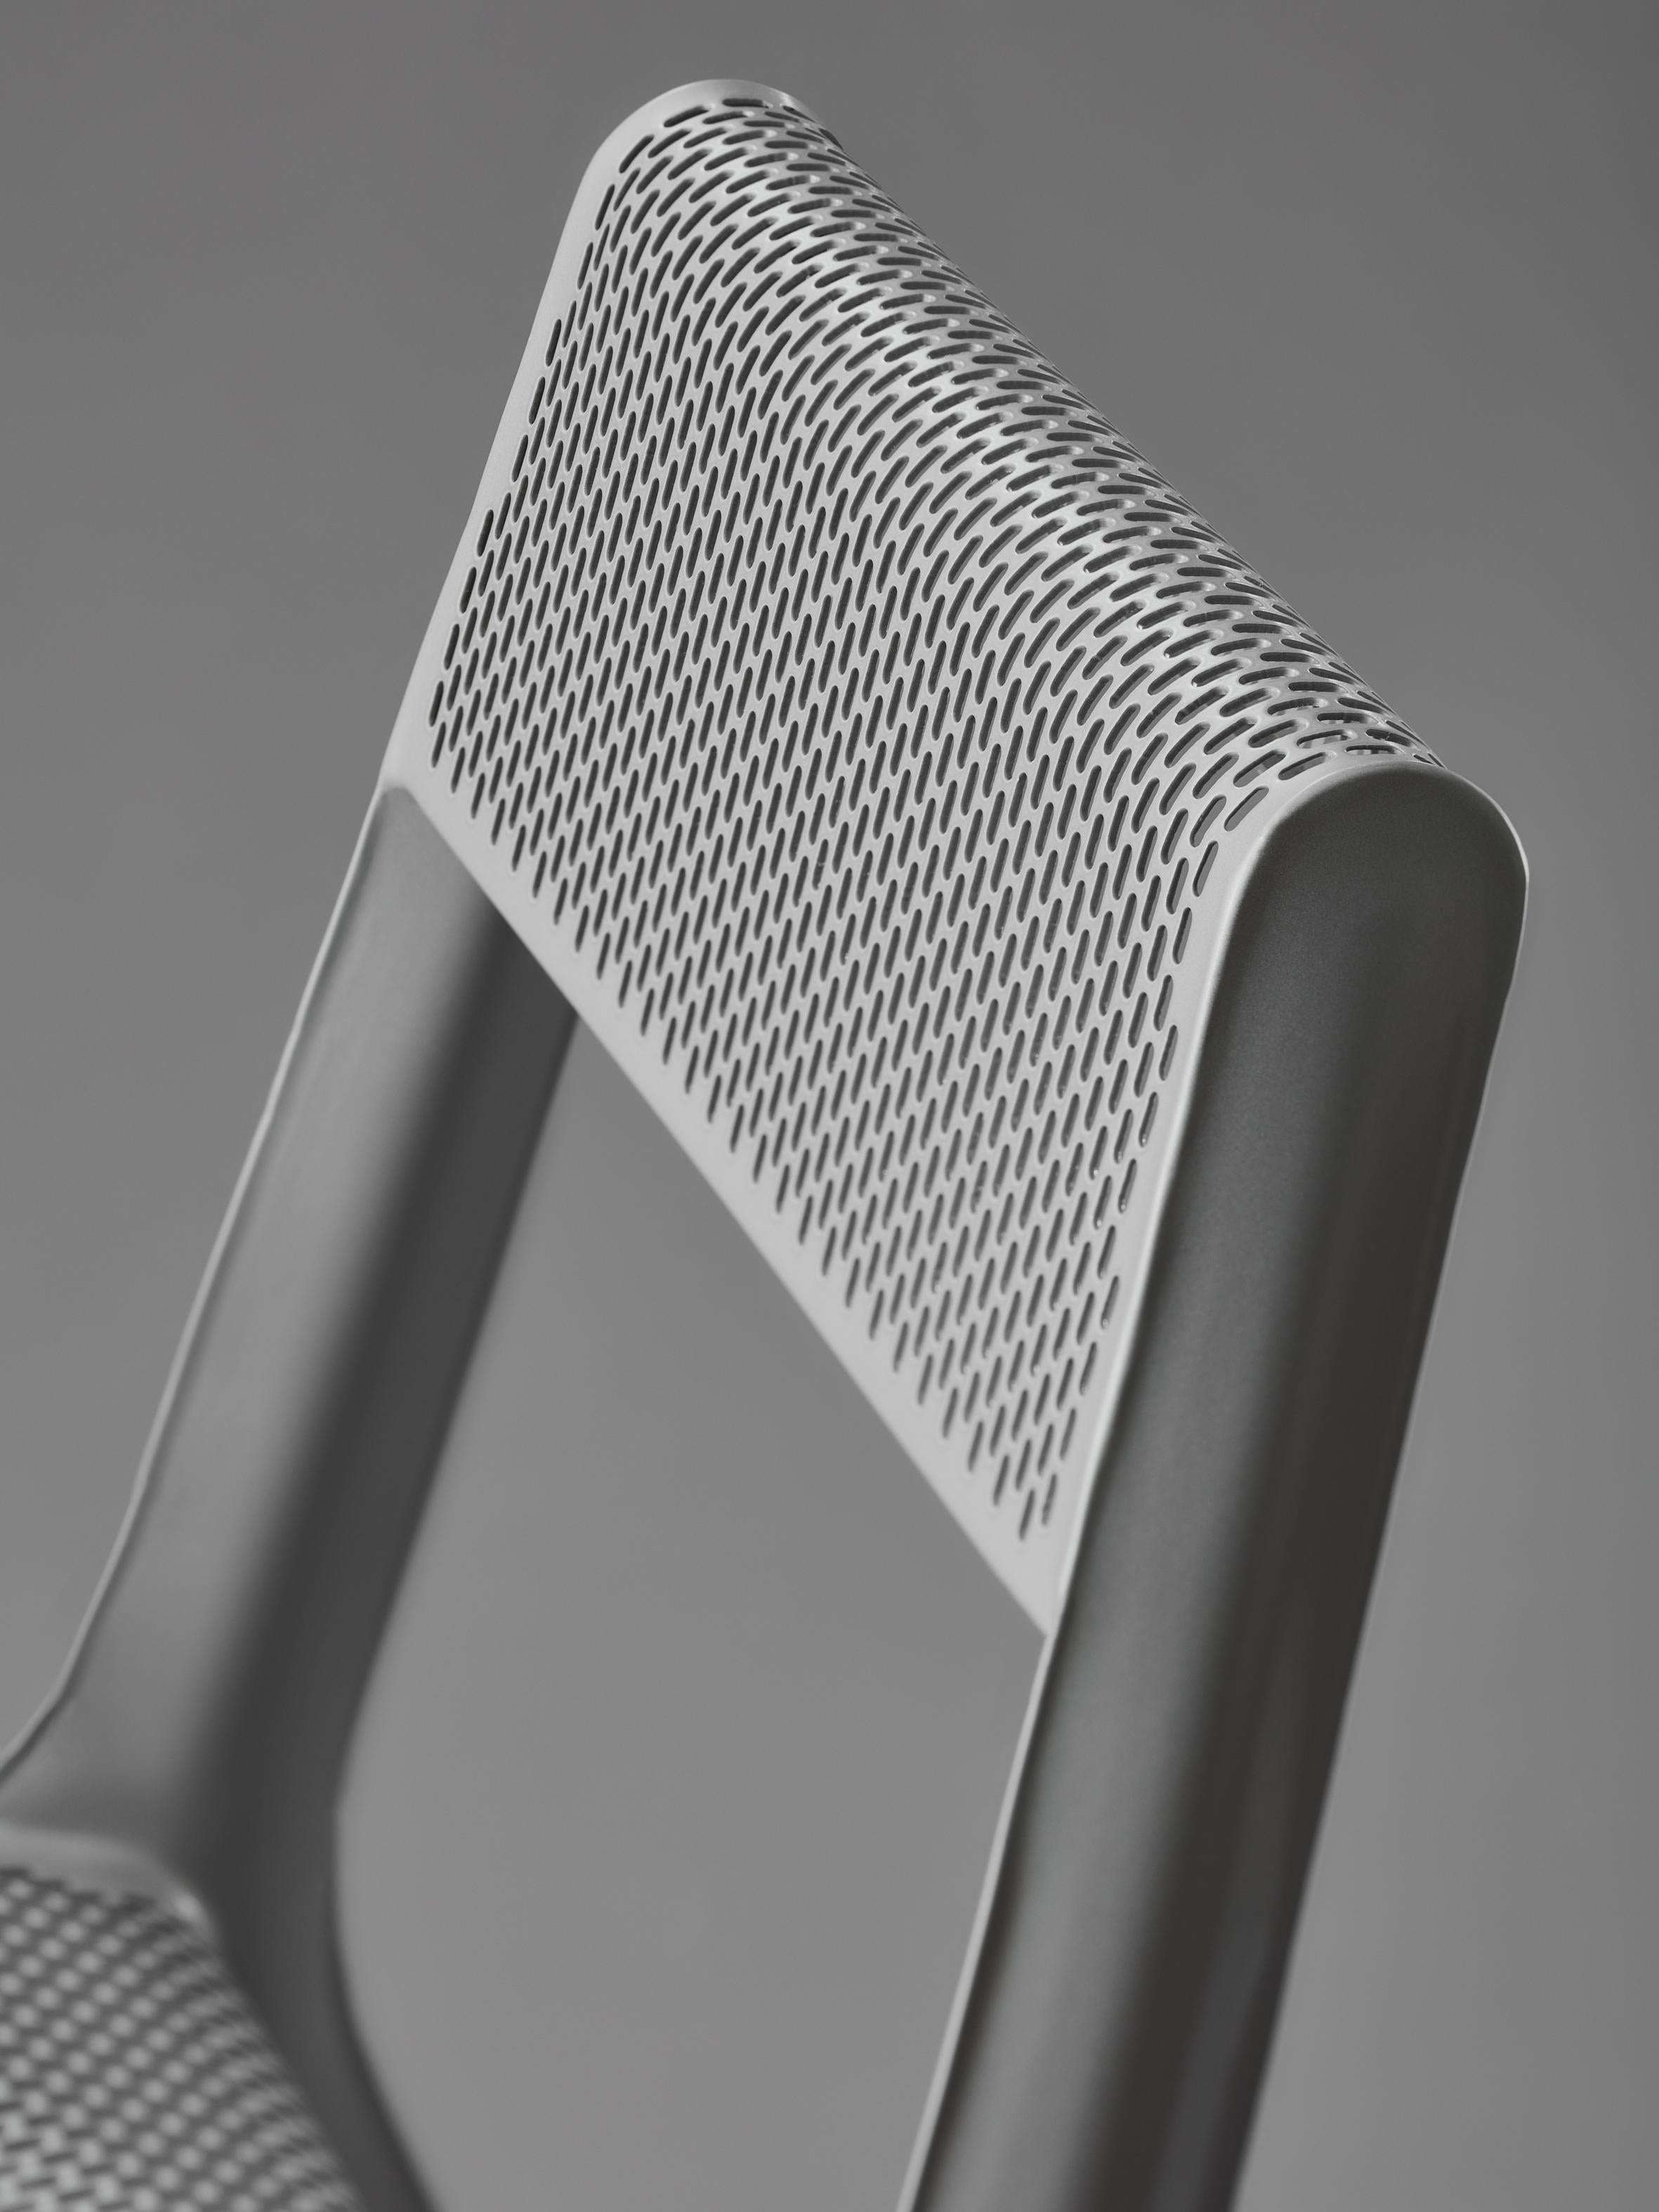 Powder-Coated Natural Anodic Ultraleggera Chair by Zieta For Sale